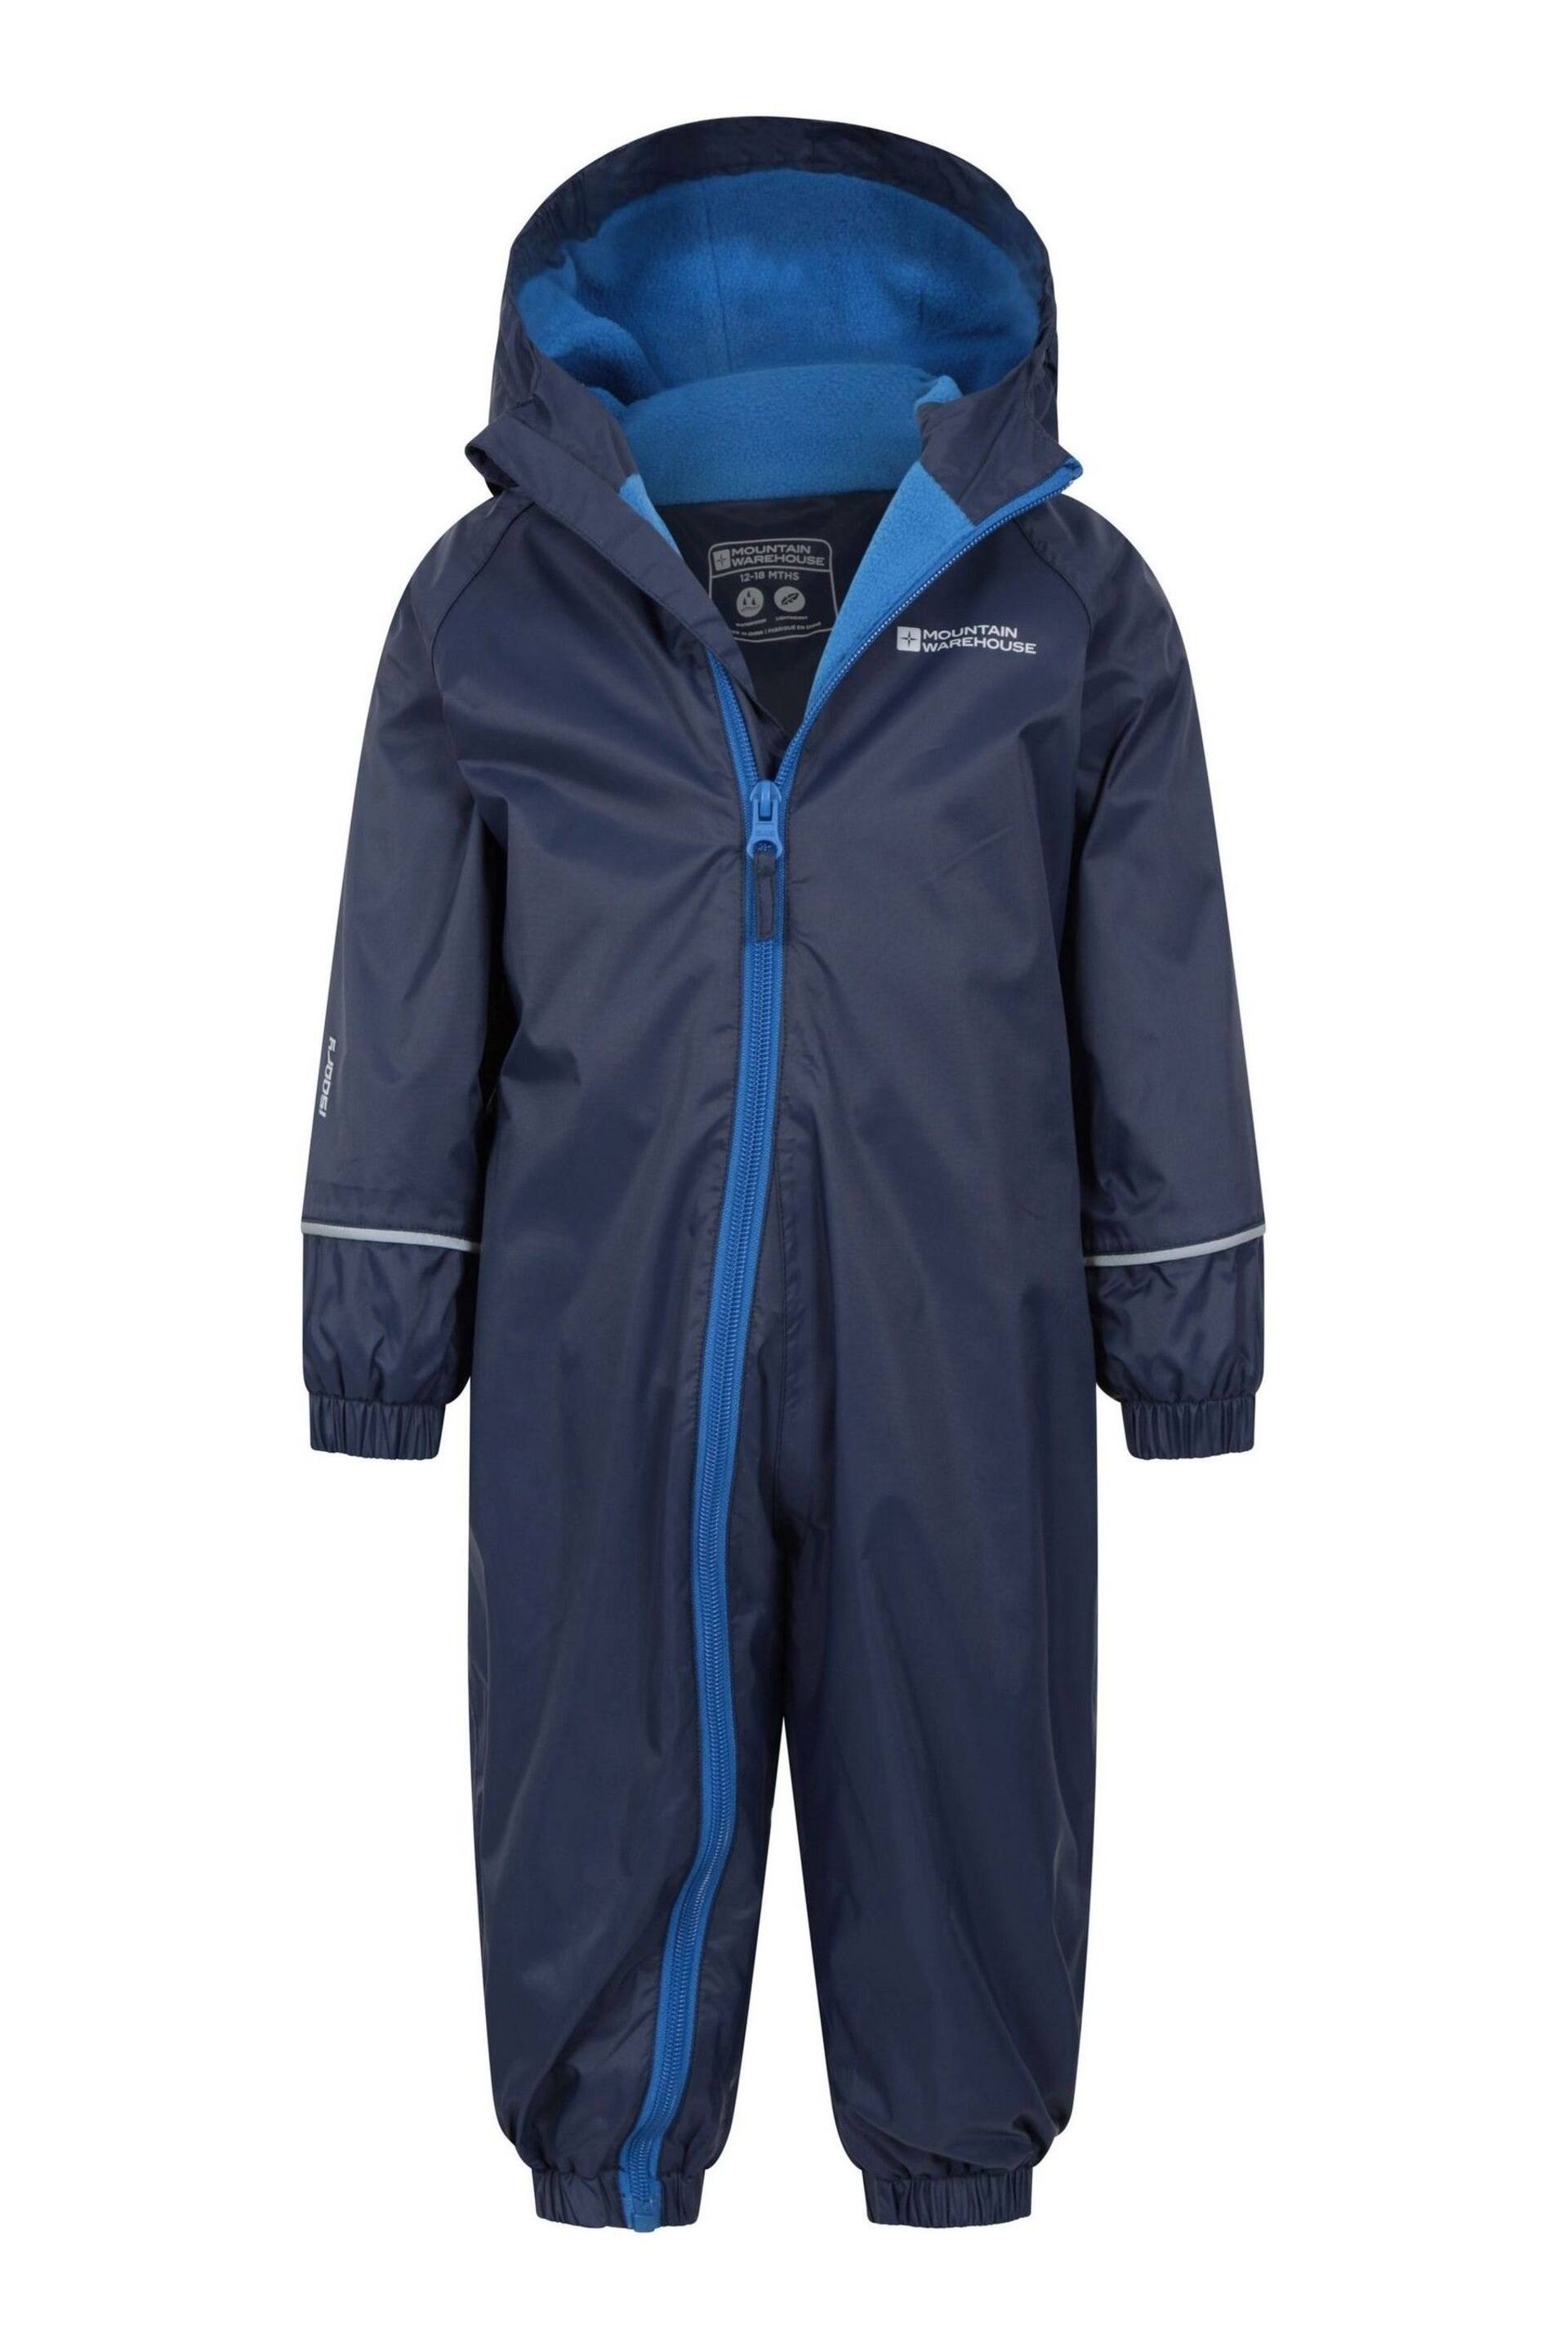 Mountain Warehouse Blue Junior Spright Waterproof Fleece Lined Rainsuit - Image 5 of 5